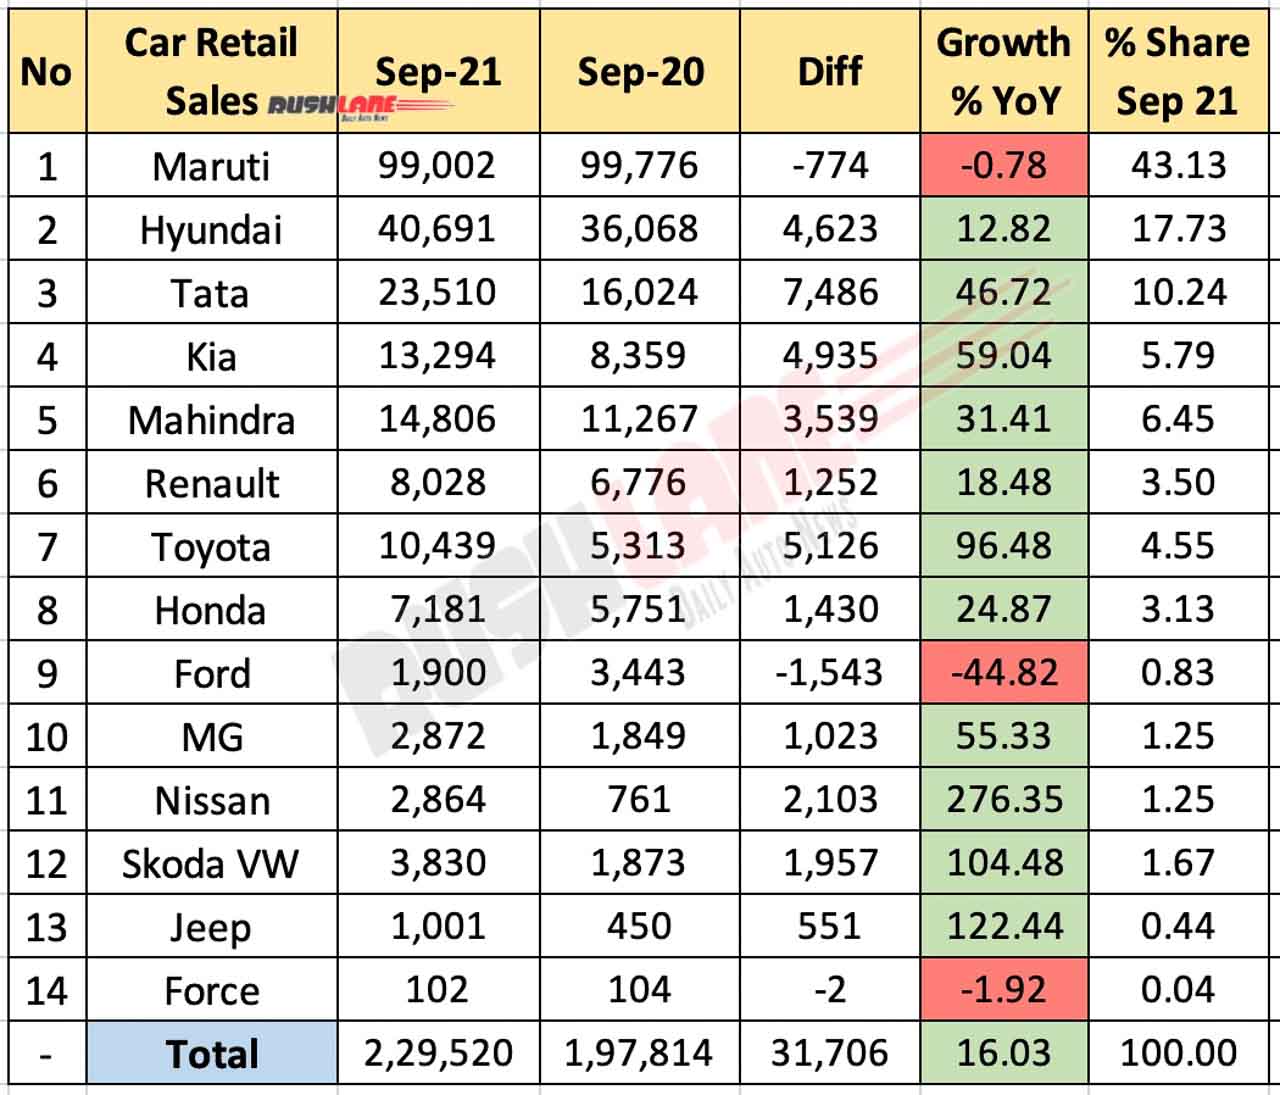 Car Retail Sales Sep 2021 vs Sep 2020 (YoY)